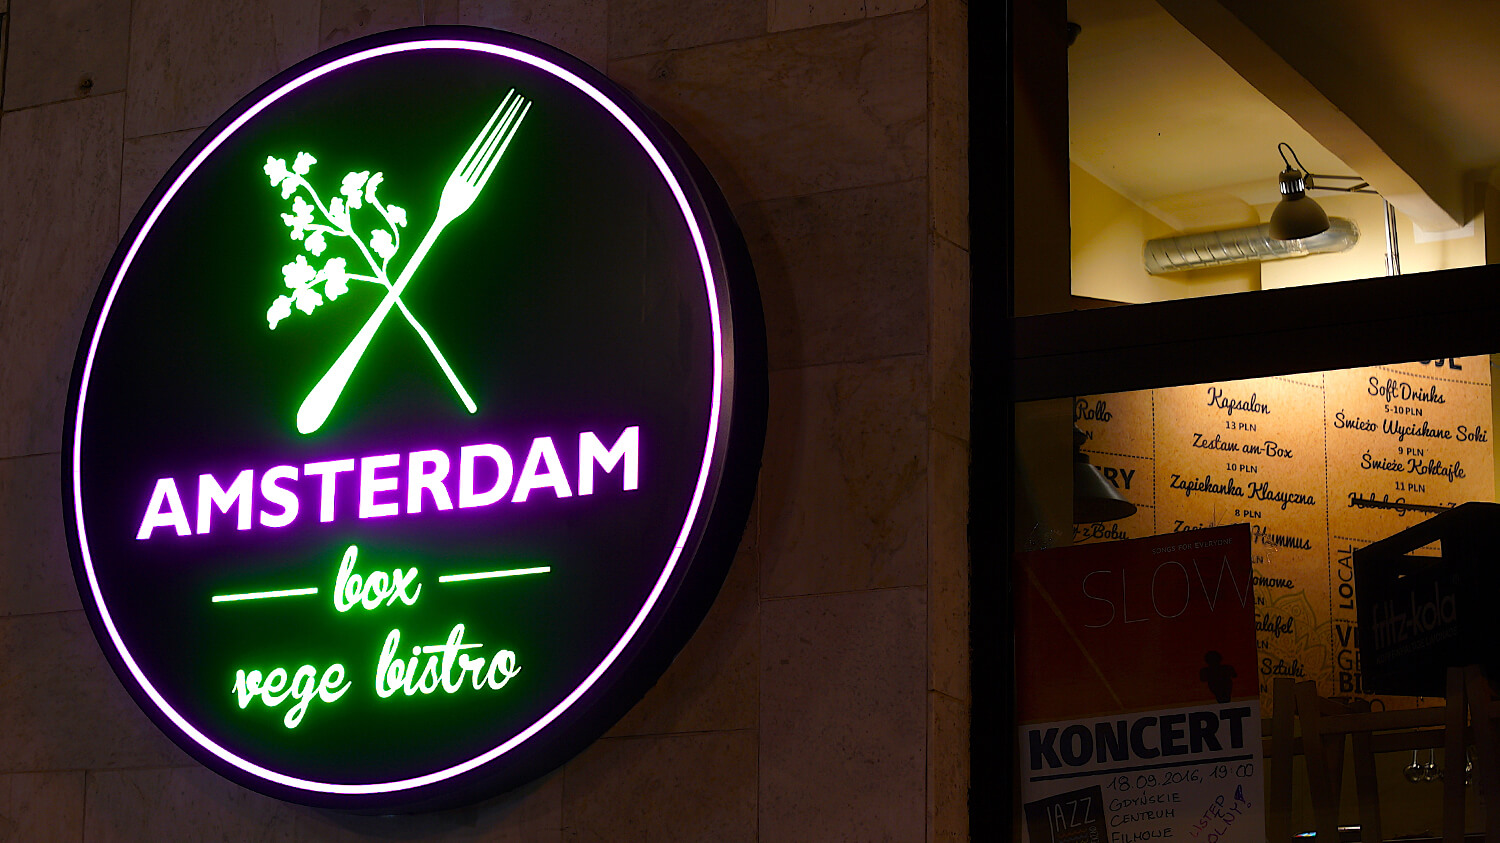 Amsterdam - Amsterdam Box - round LED illuminated panel